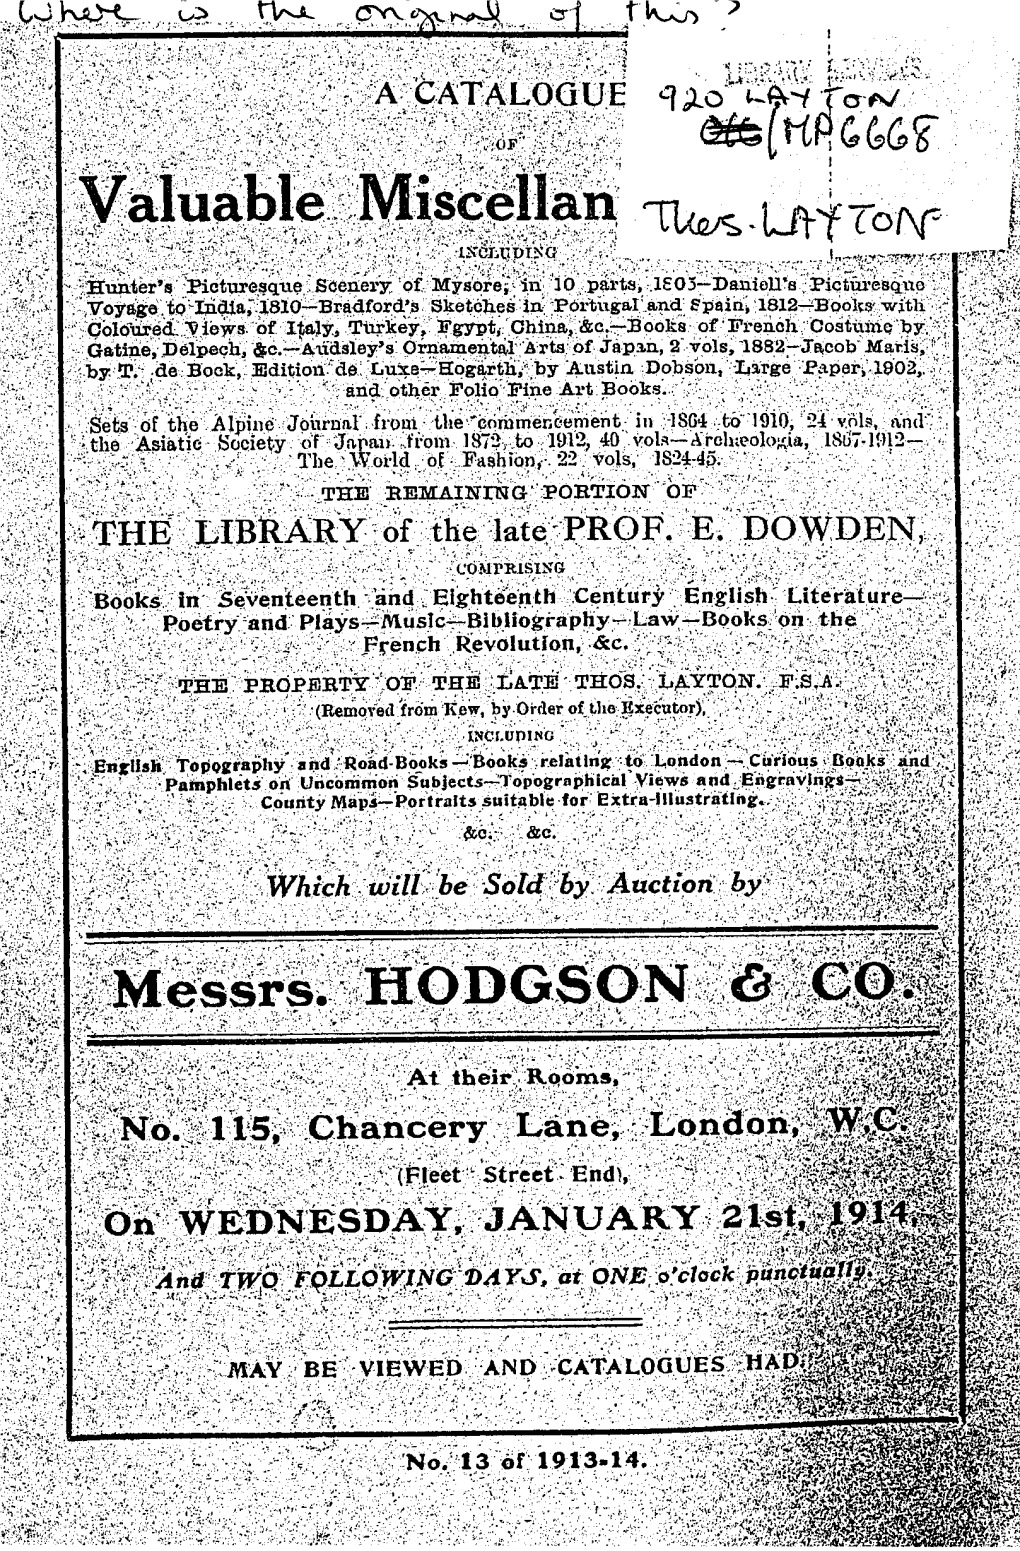 Book Sale 21 January 1914